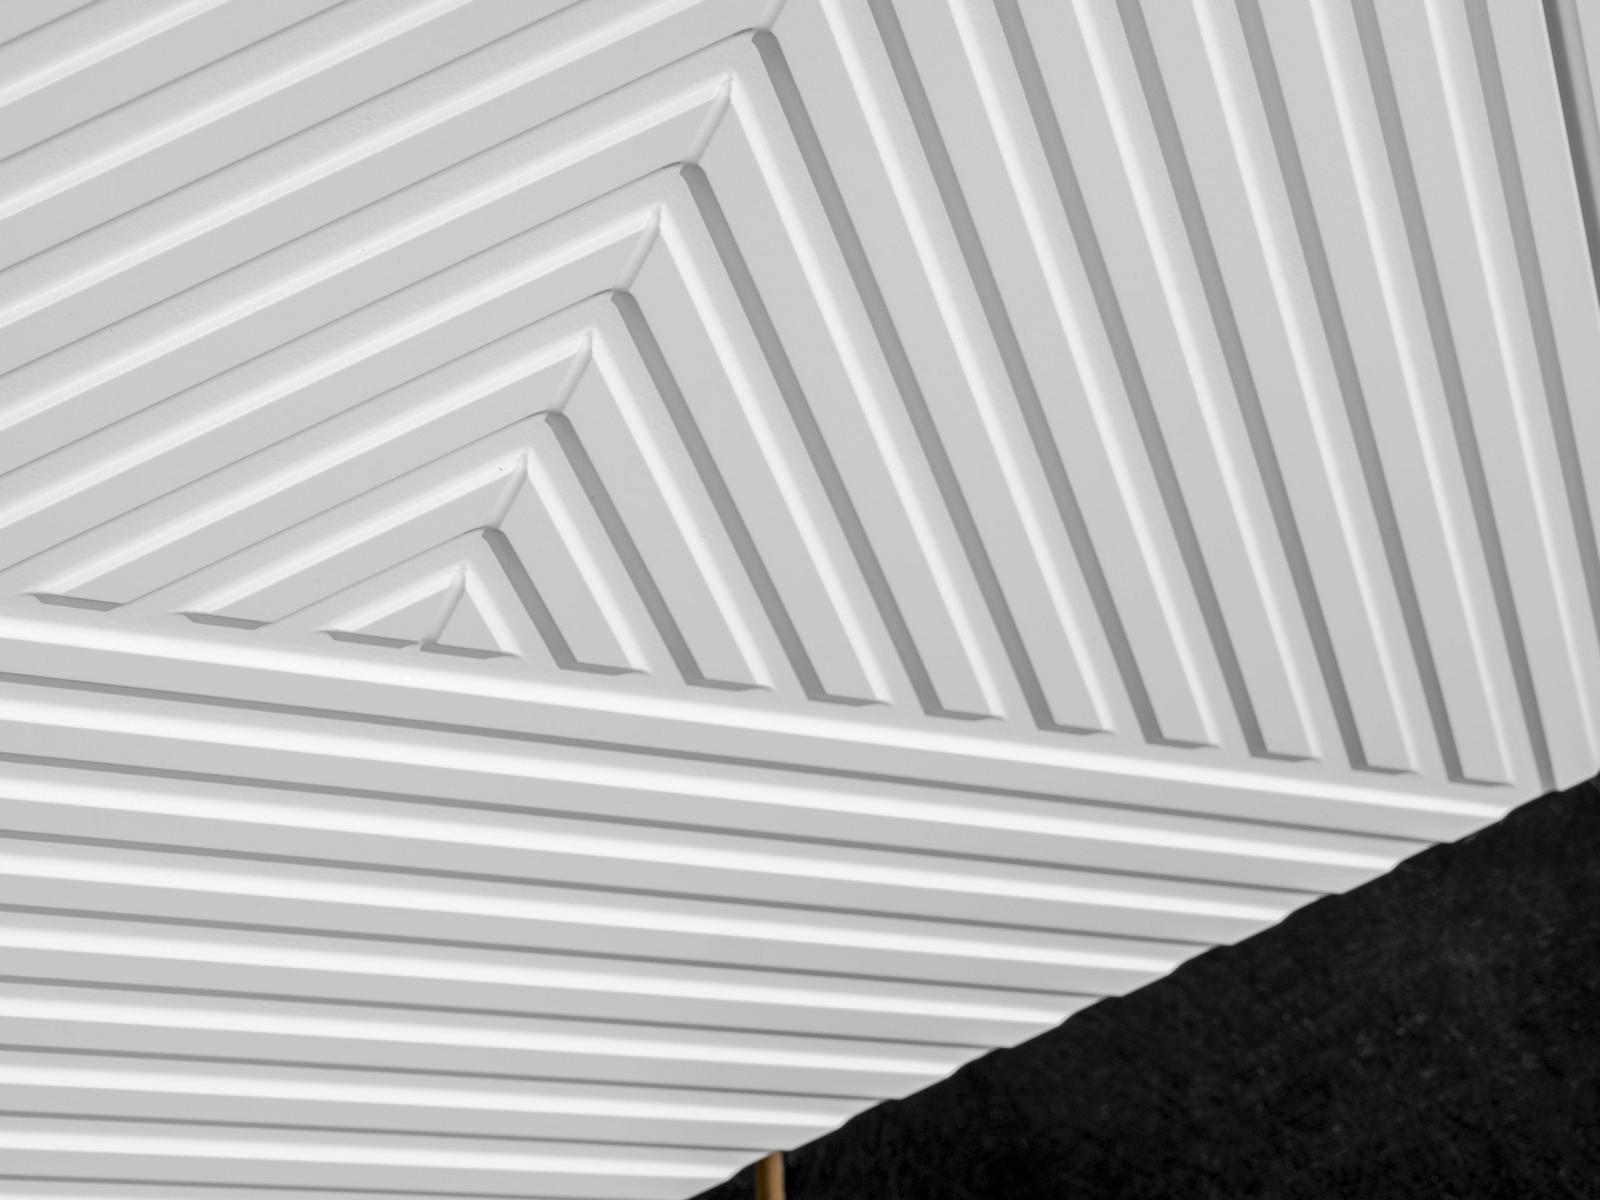 Furnival Sideboard Pyramid Modernes Design Weiß 3-türig